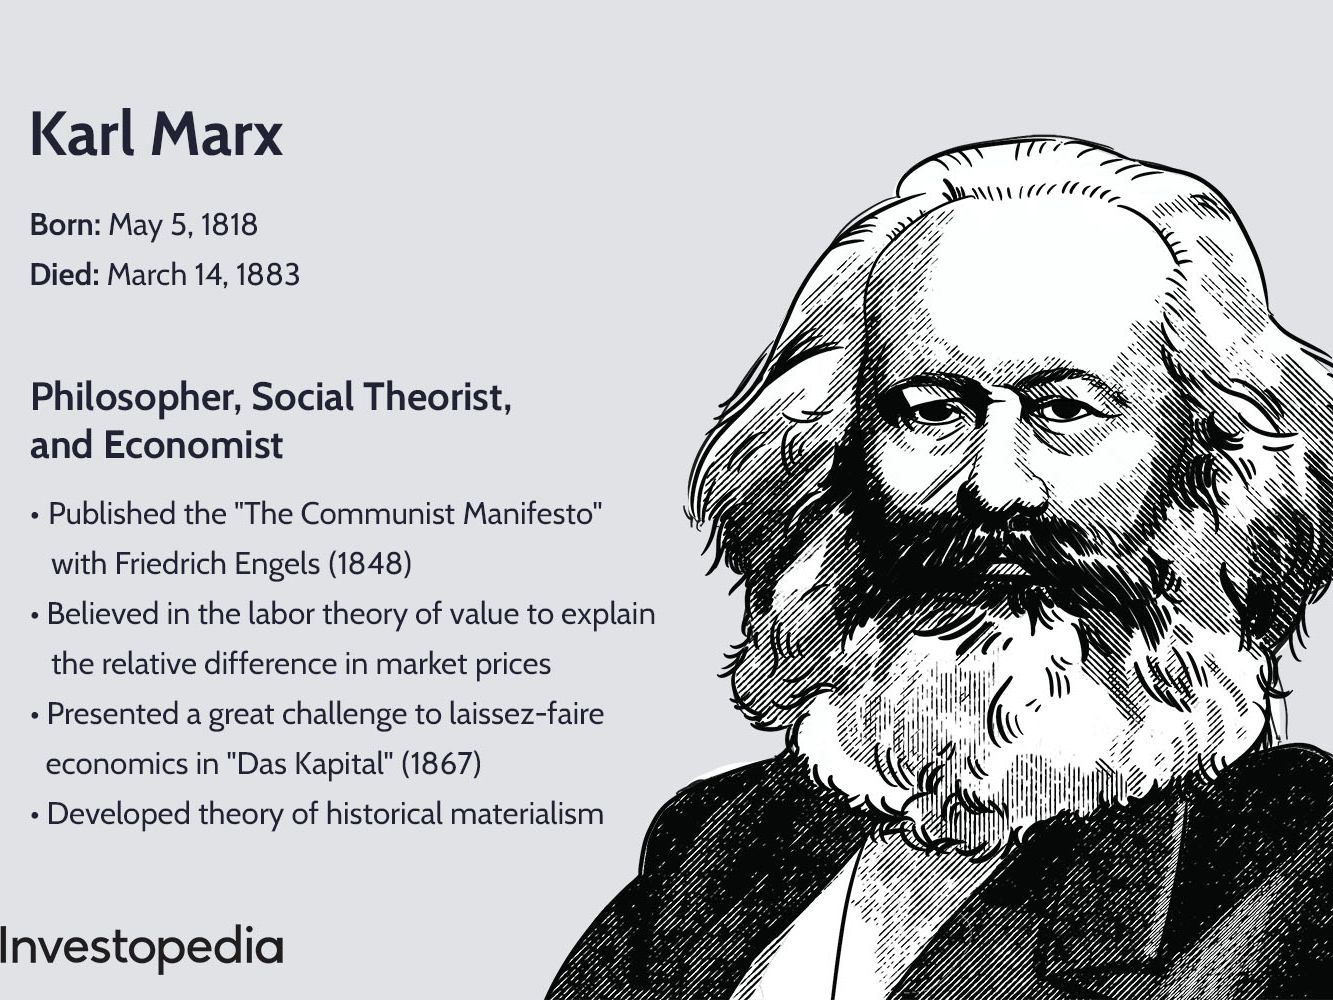 Karl Marx - German philosopher and economist